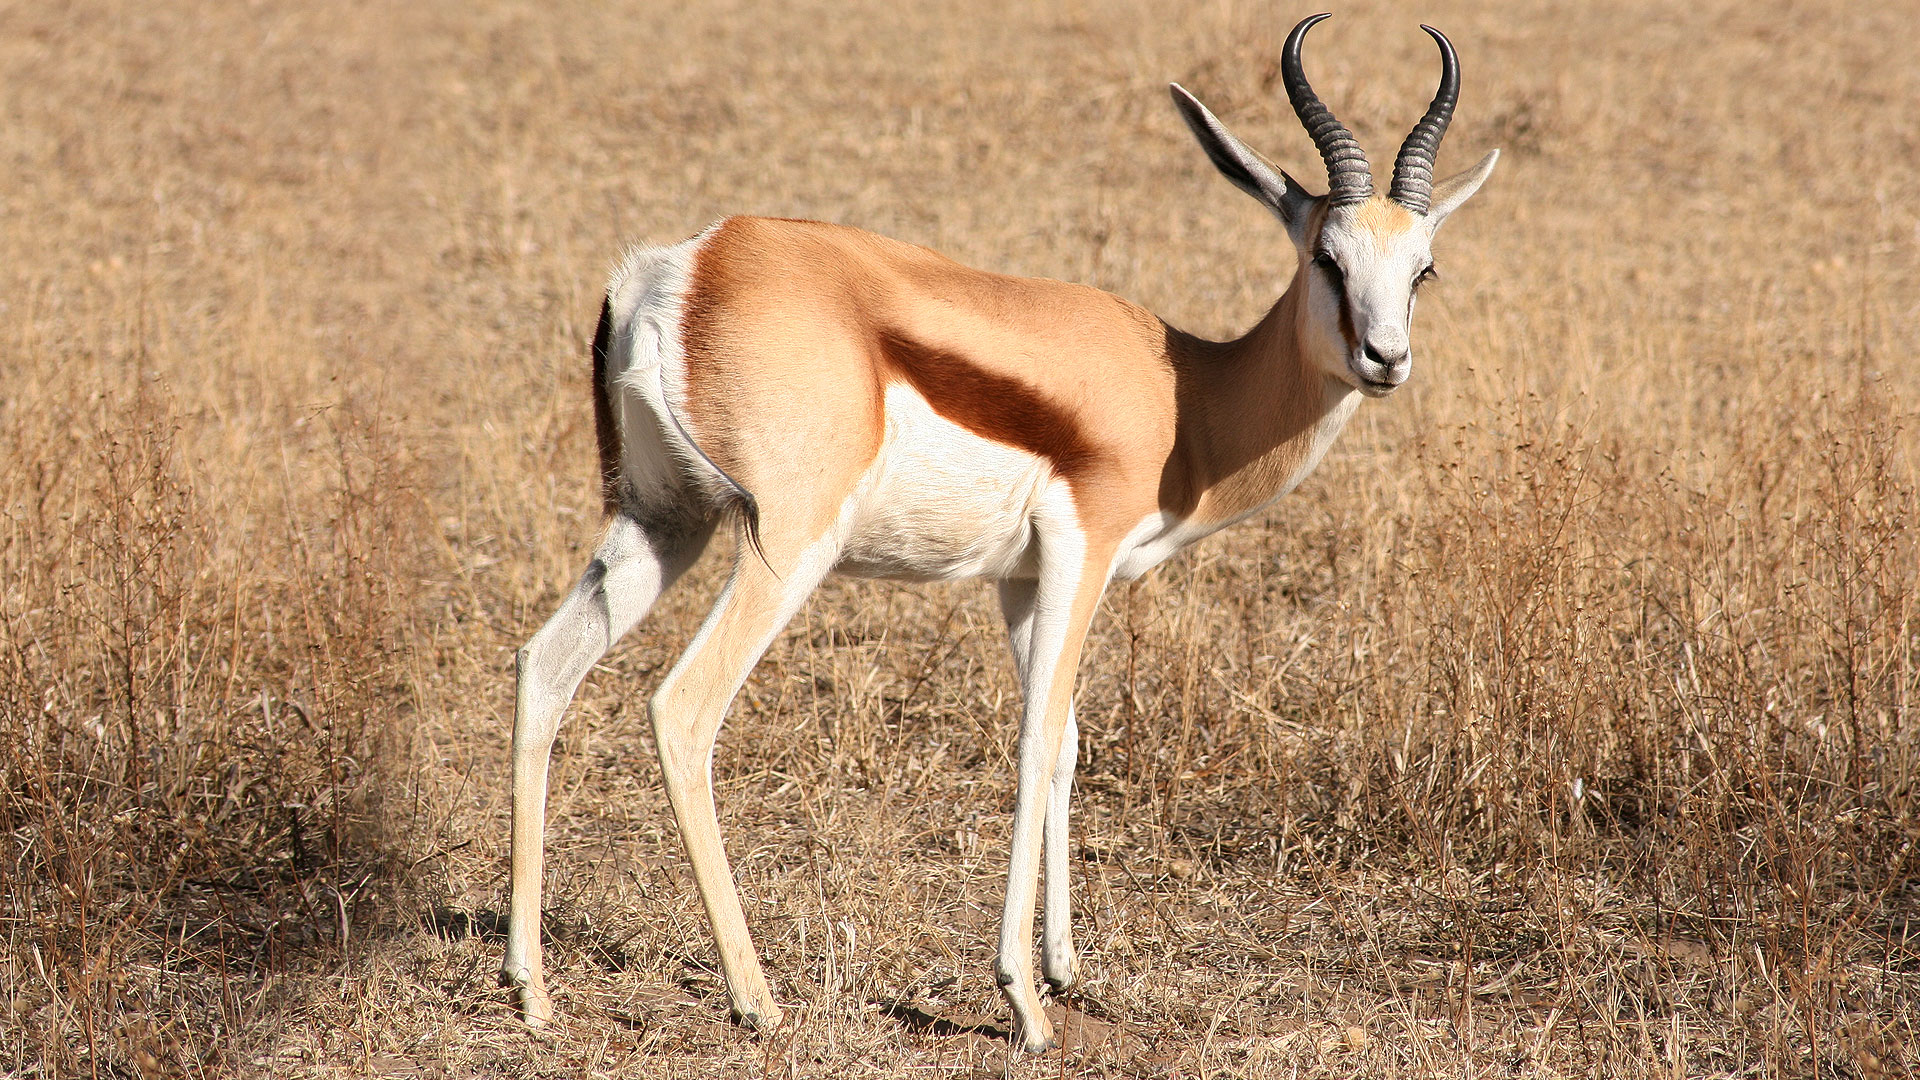 Le springbok, un animal devenu symbole en Afrique du Sud